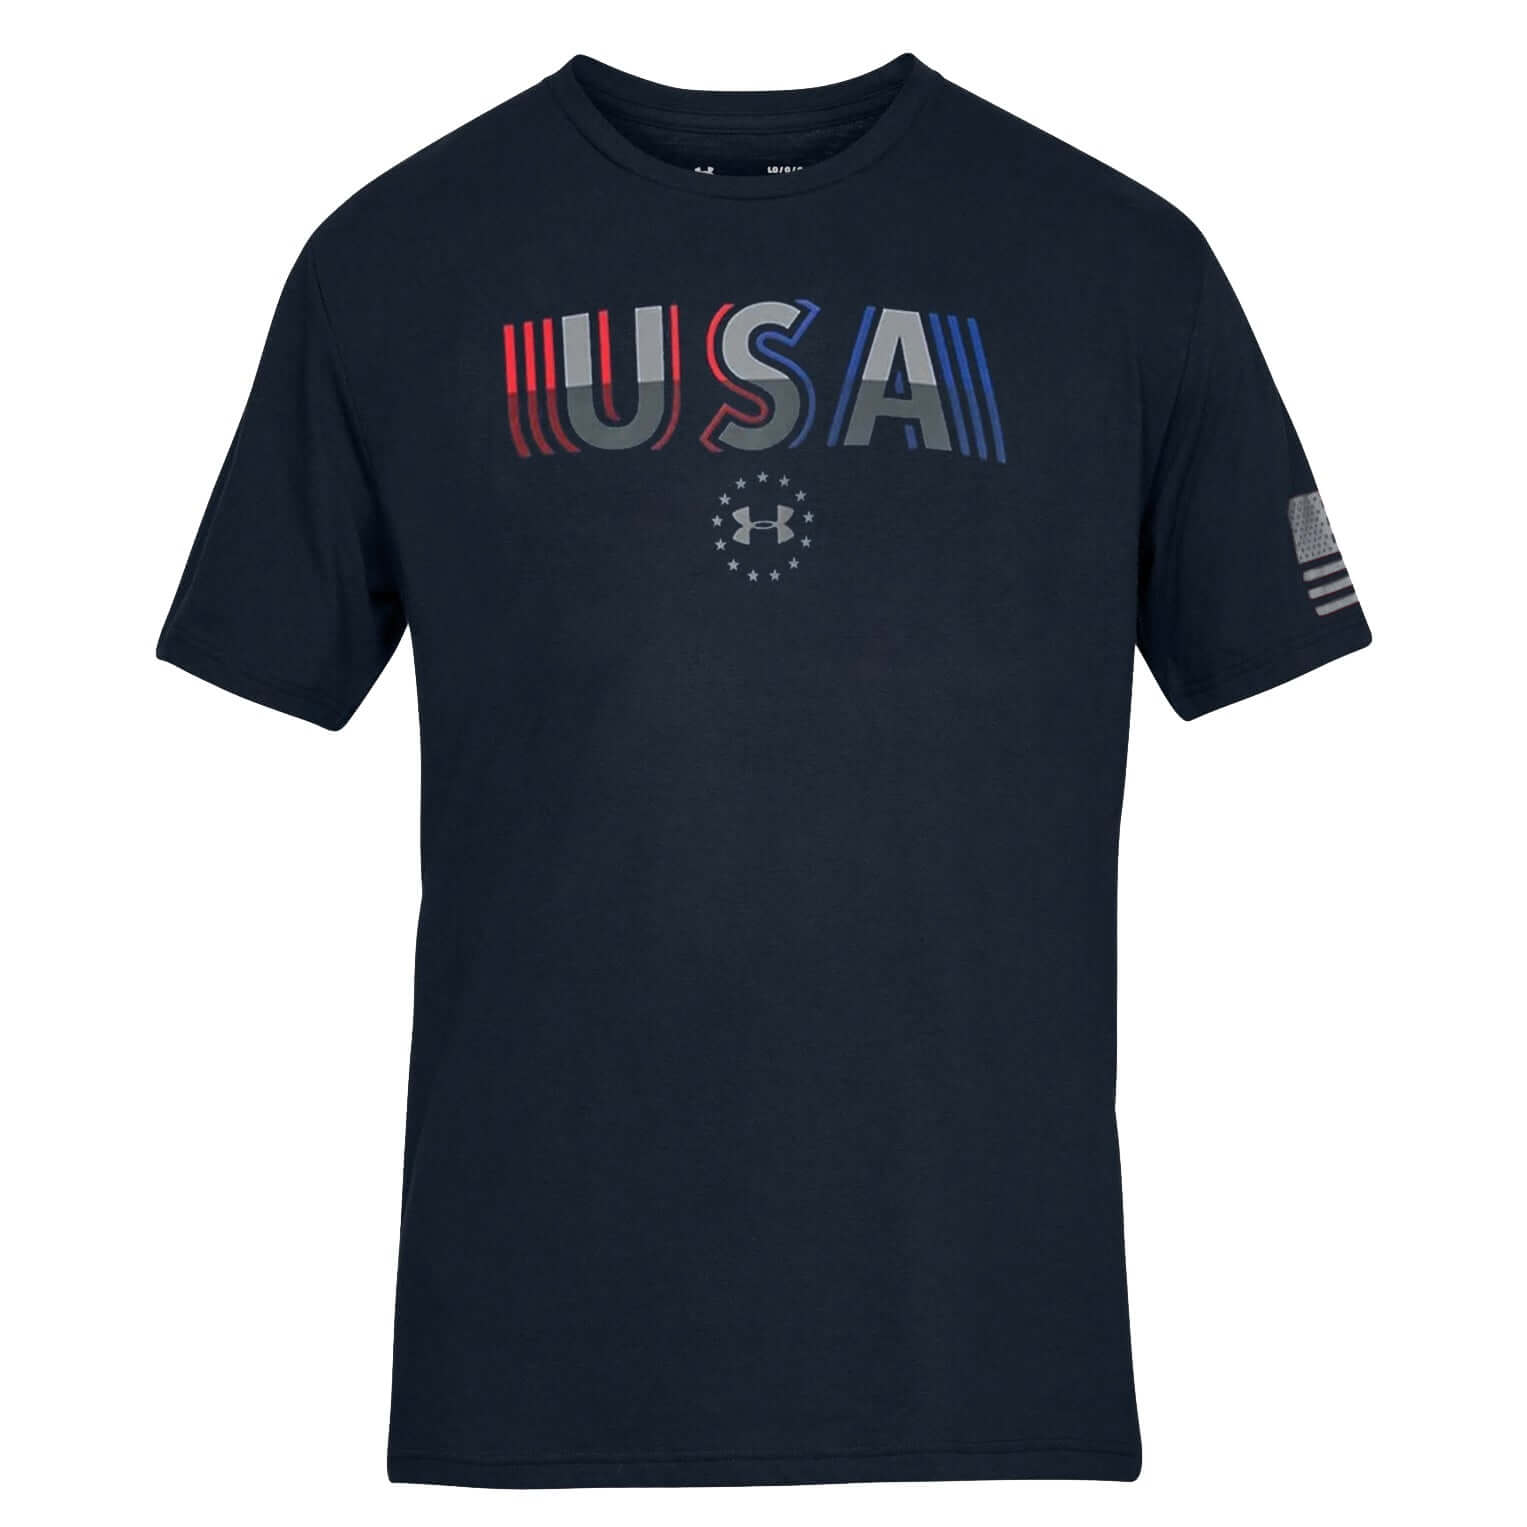 Under Armour Freedom USA Undefeated Navy – The Flag Shirt